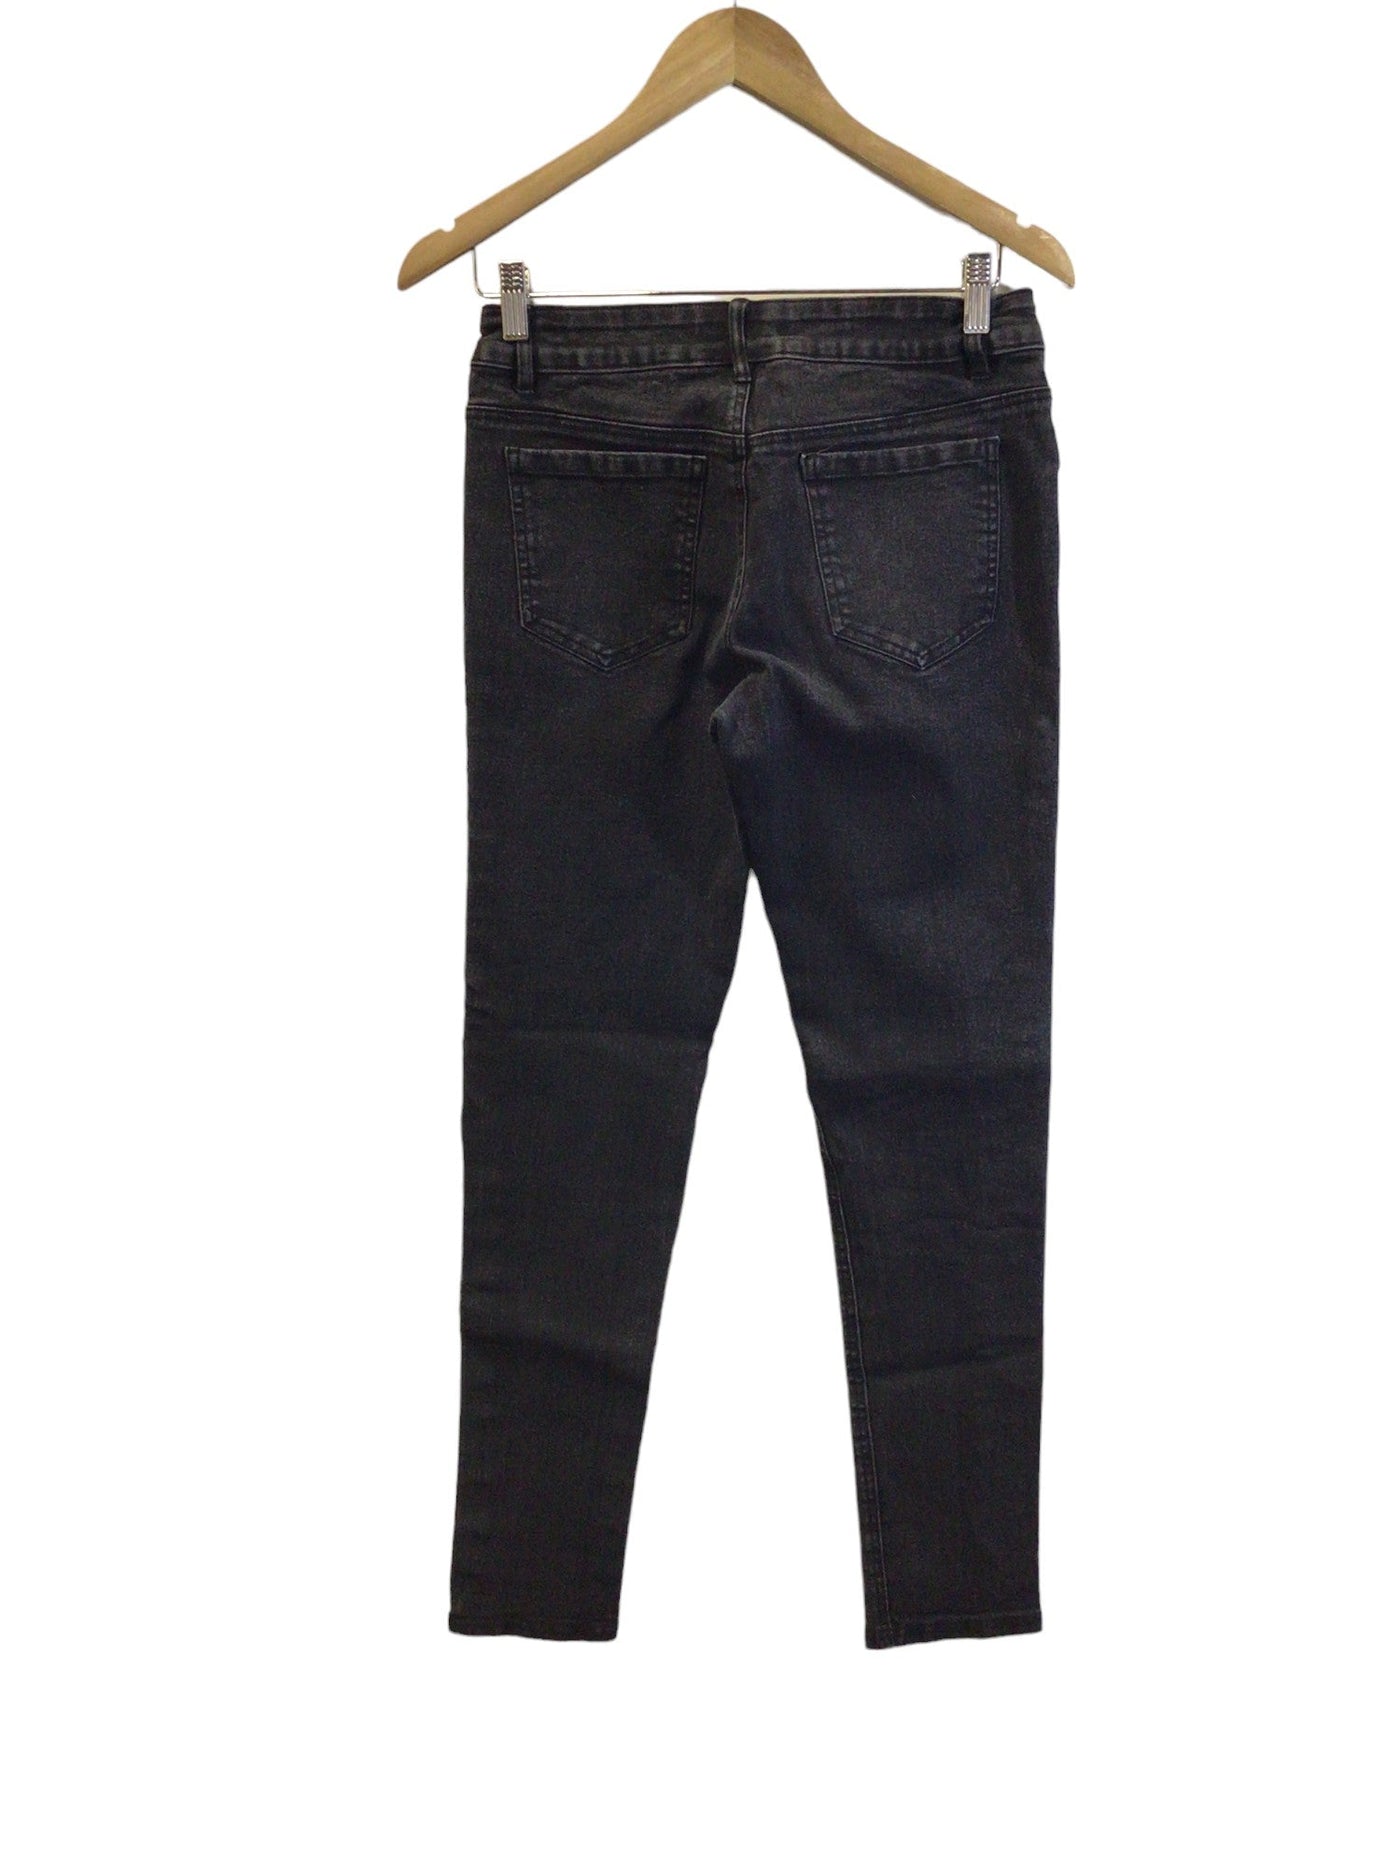 NYGARD STYLE Women Straight-Legged Jeans Regular fit in Black - Size 8 | 15 $ KOOP